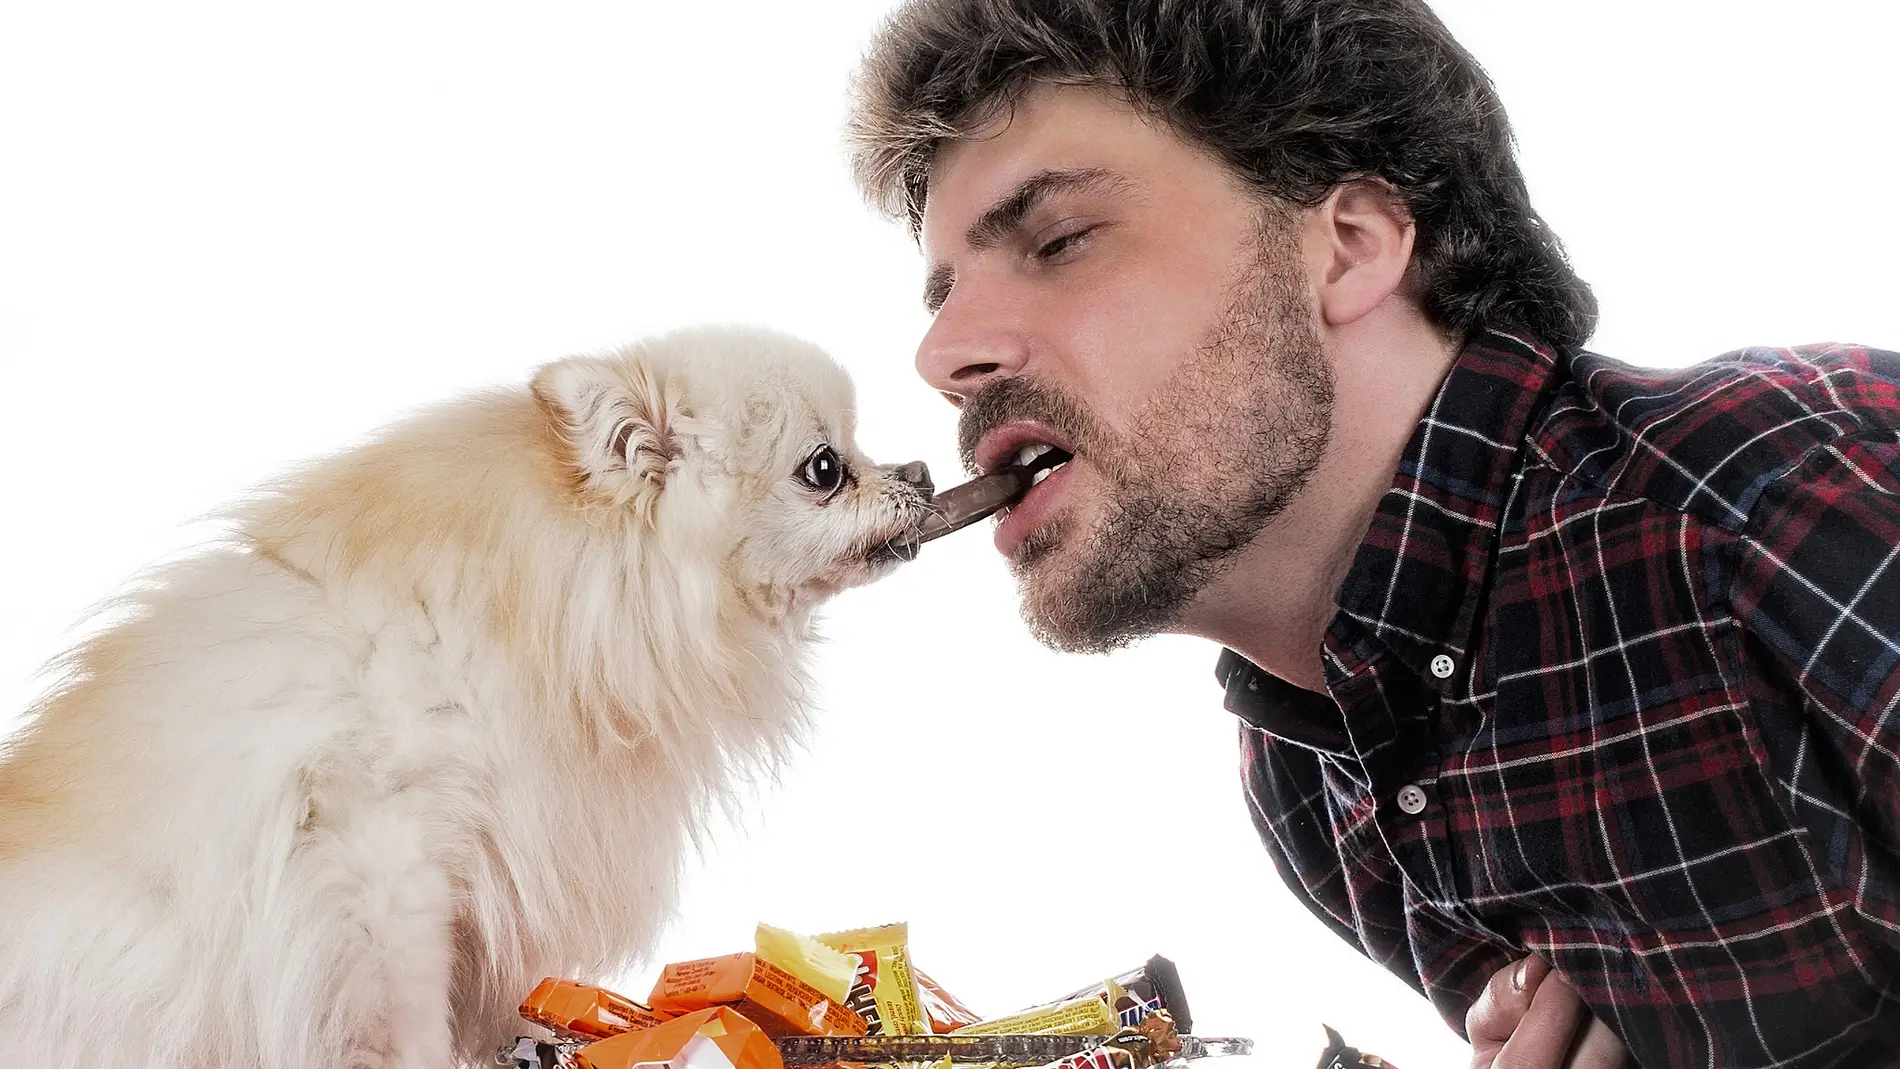 ¿Seguro de compartir el chocolate con tu mascota?